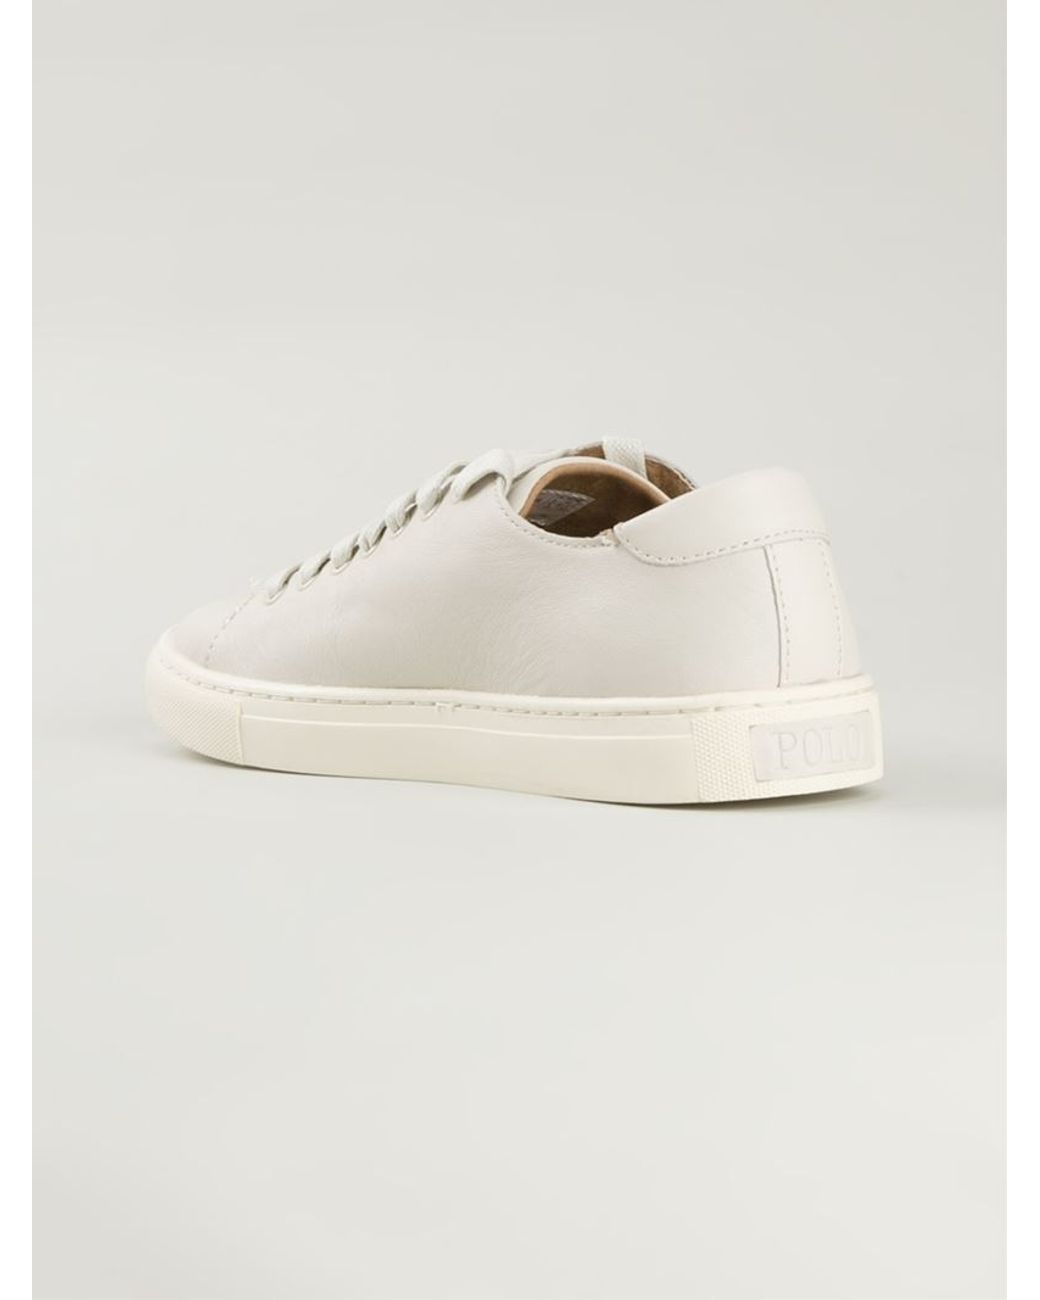 Polo Ralph Lauren Jermain Sneakers in White for Men | Lyst